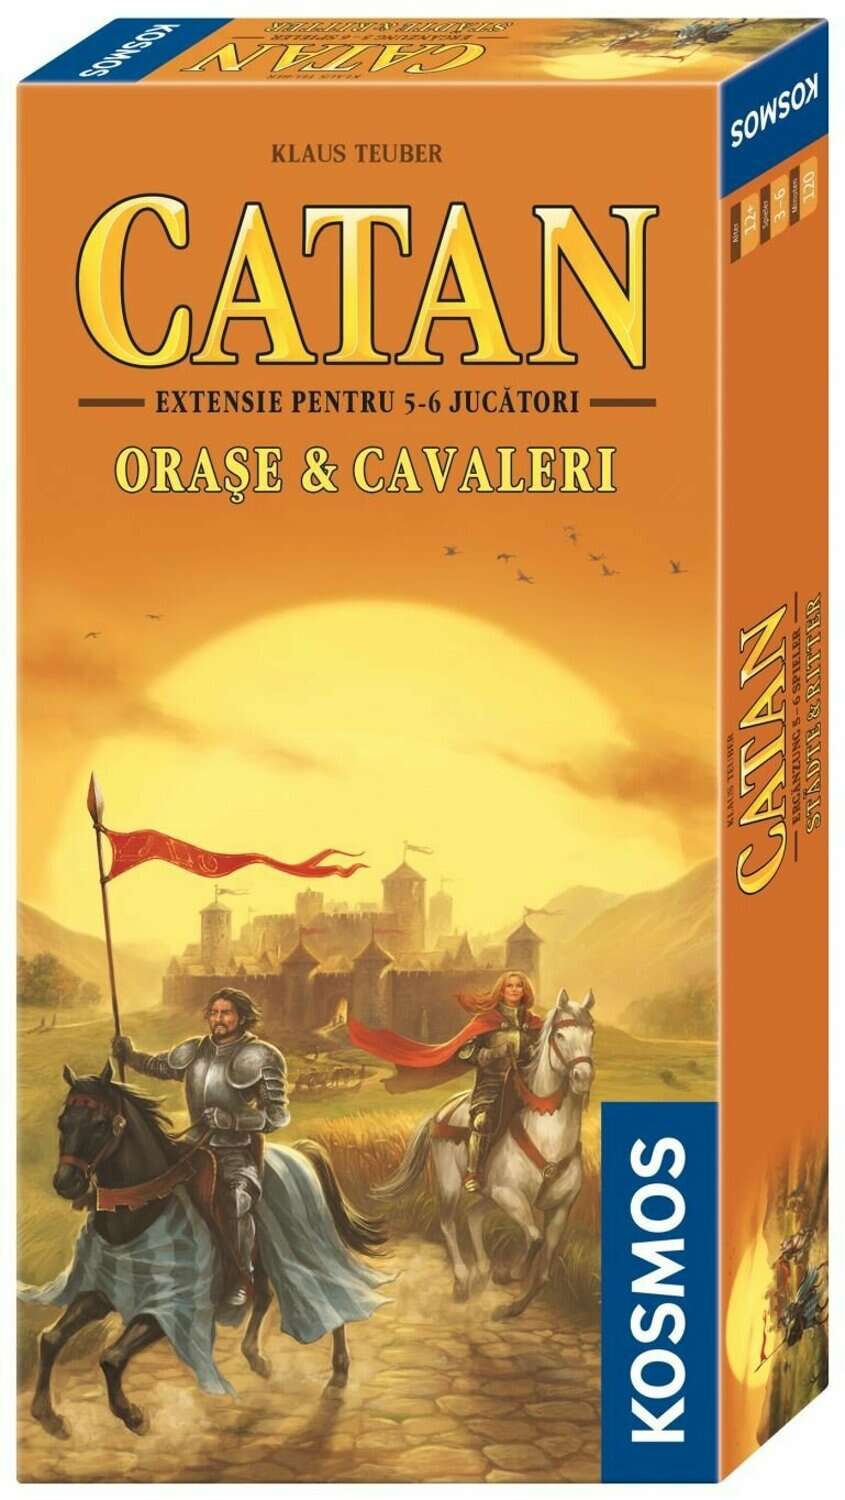 Catan - Orase si cavaleri extensia pentru 5/6 jucatori | Kosmos